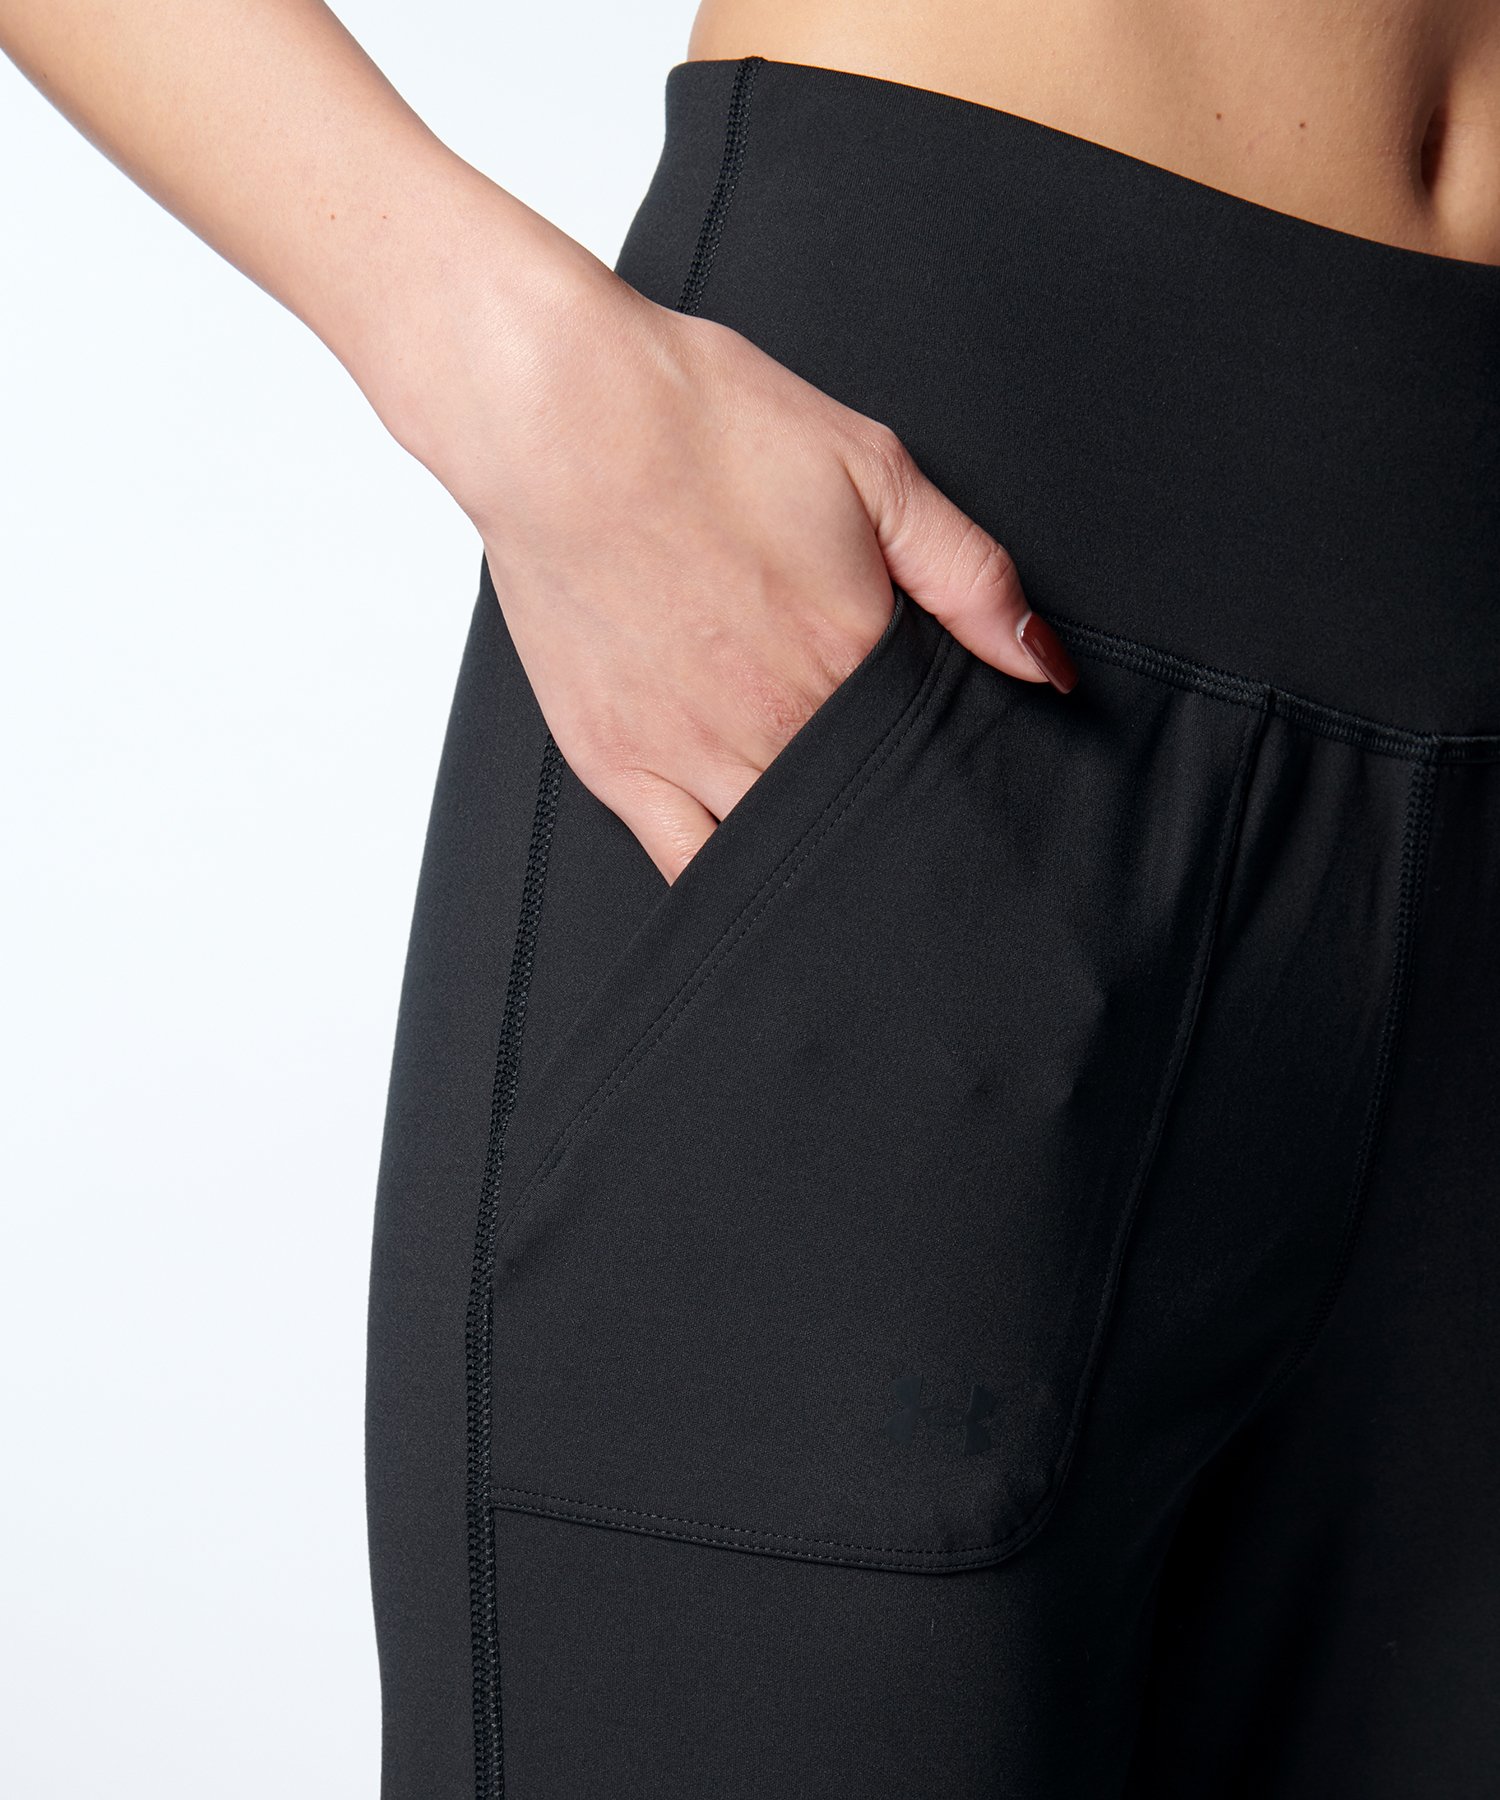 Under Armor Motion black jogging pants for women - 1375077-001